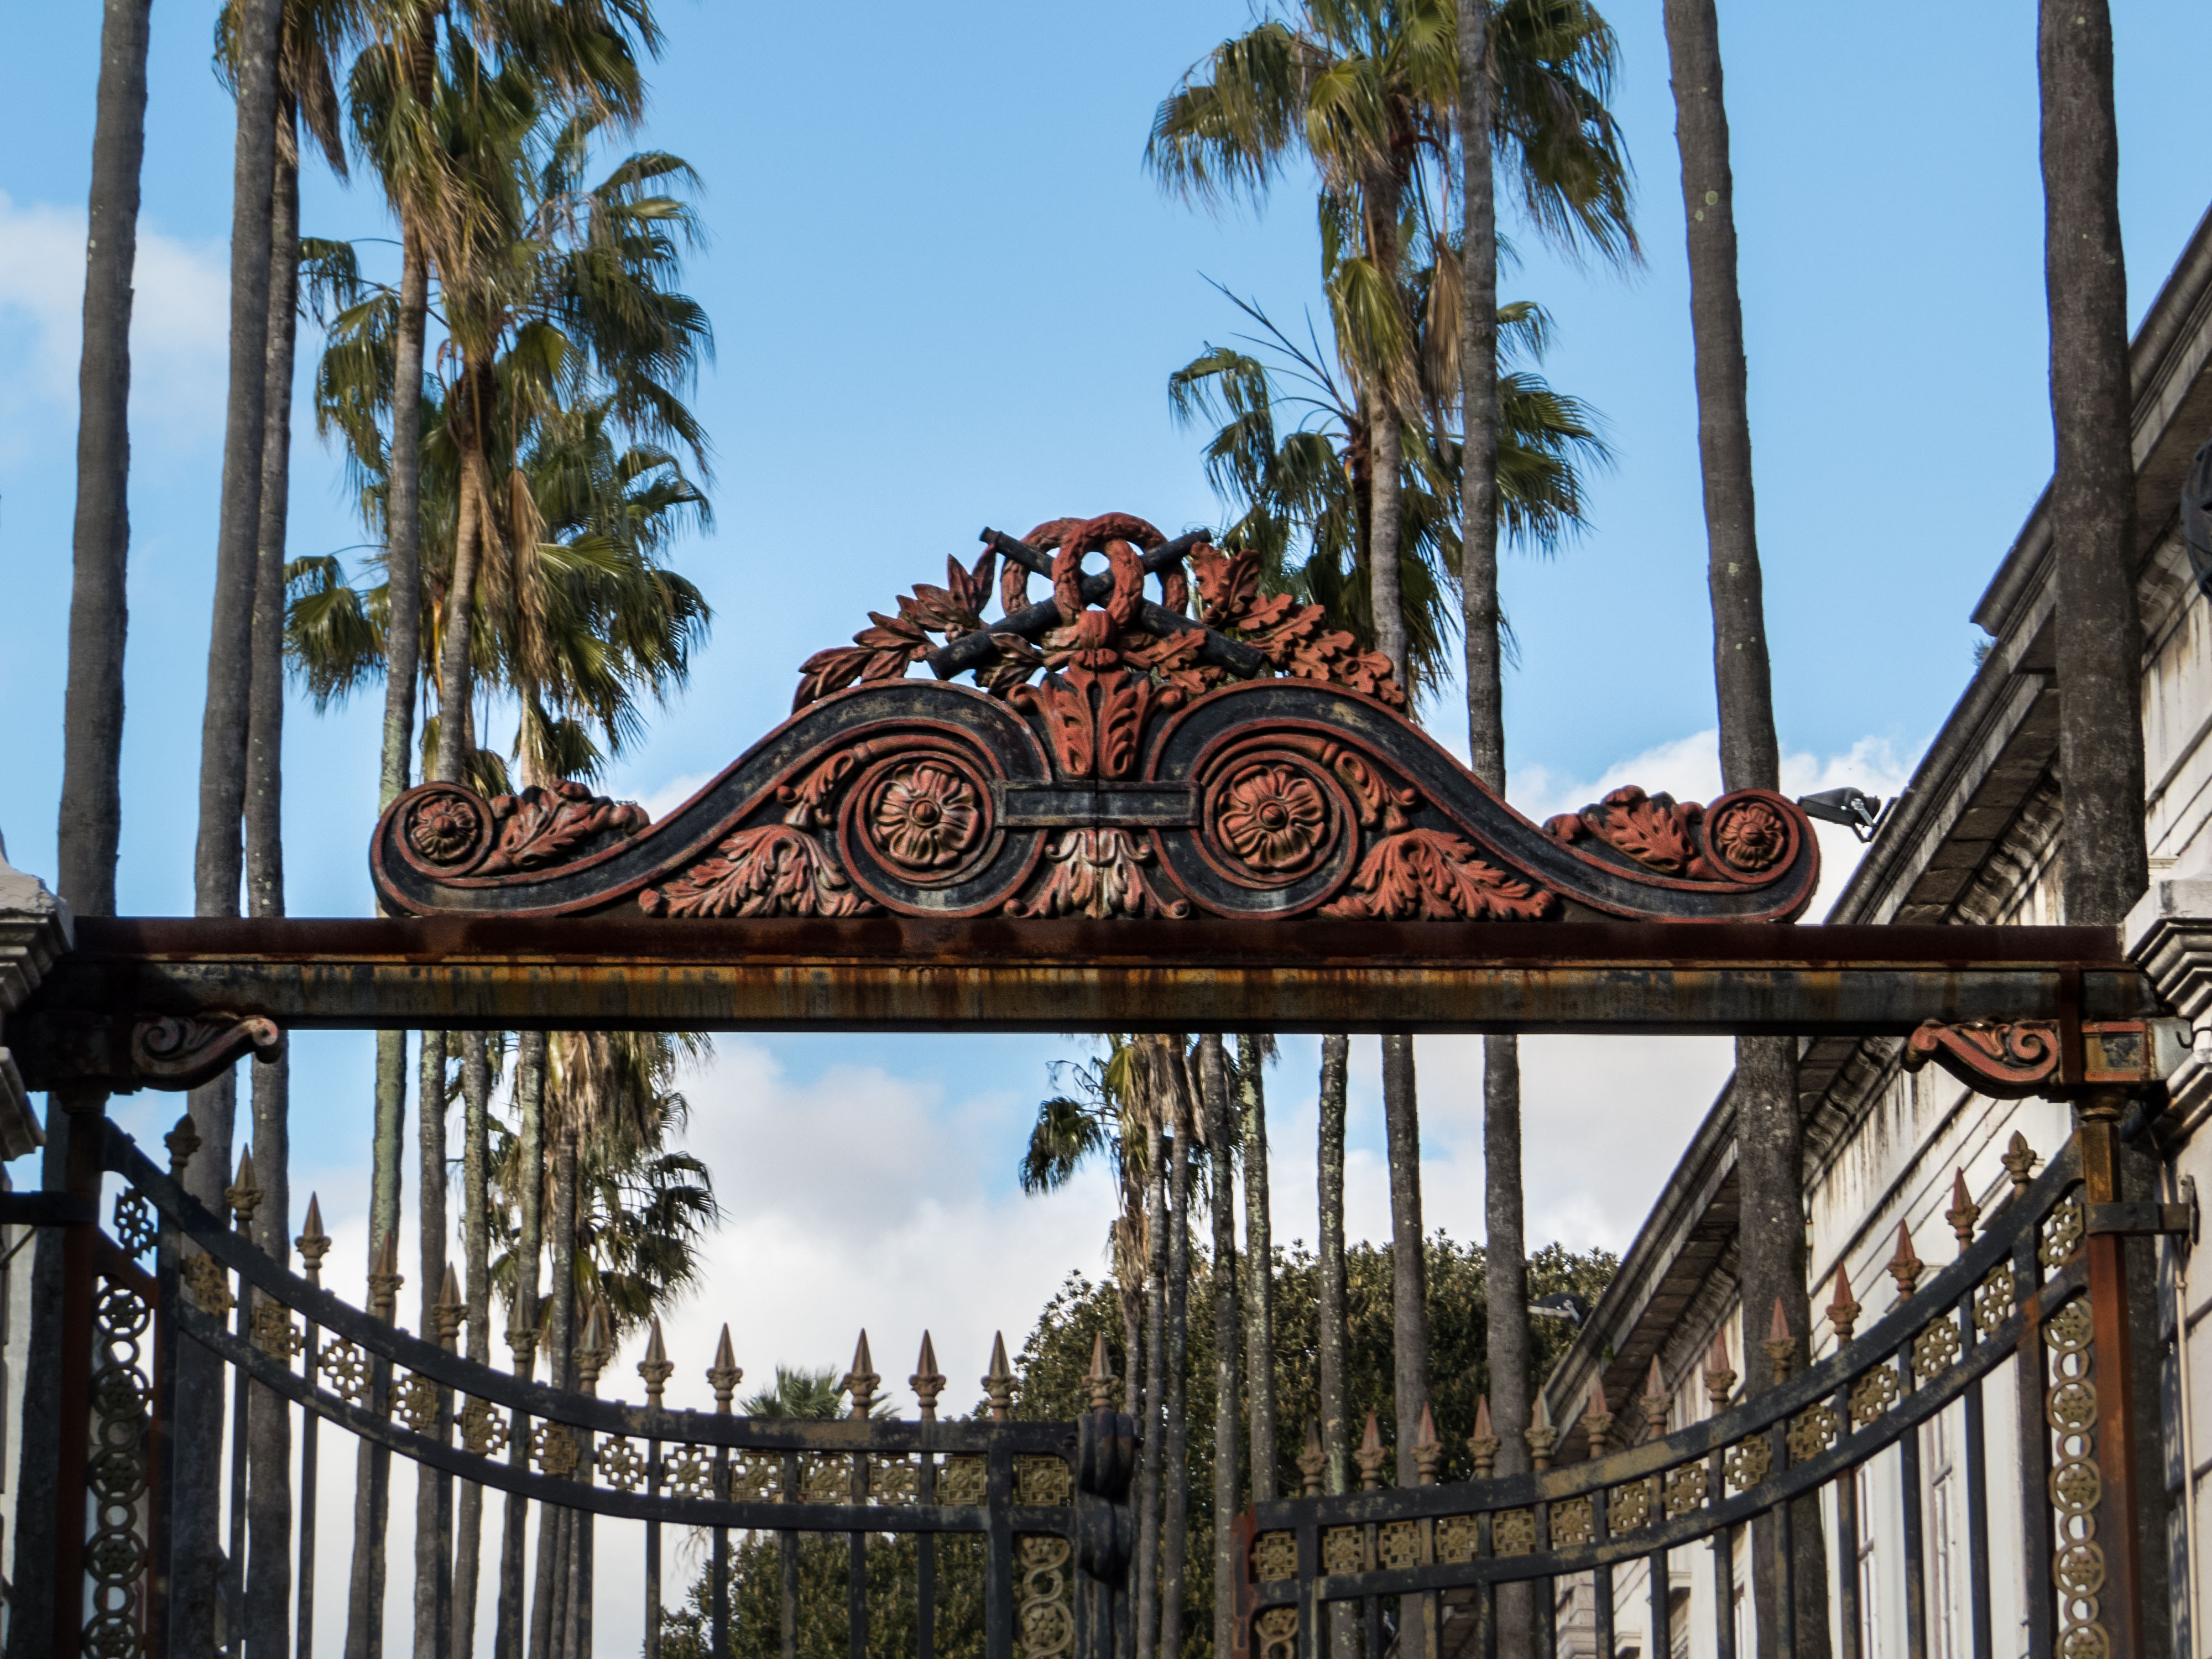 The gate ornaments, Beautiful, City, Entrance, Gates, HQ Photo